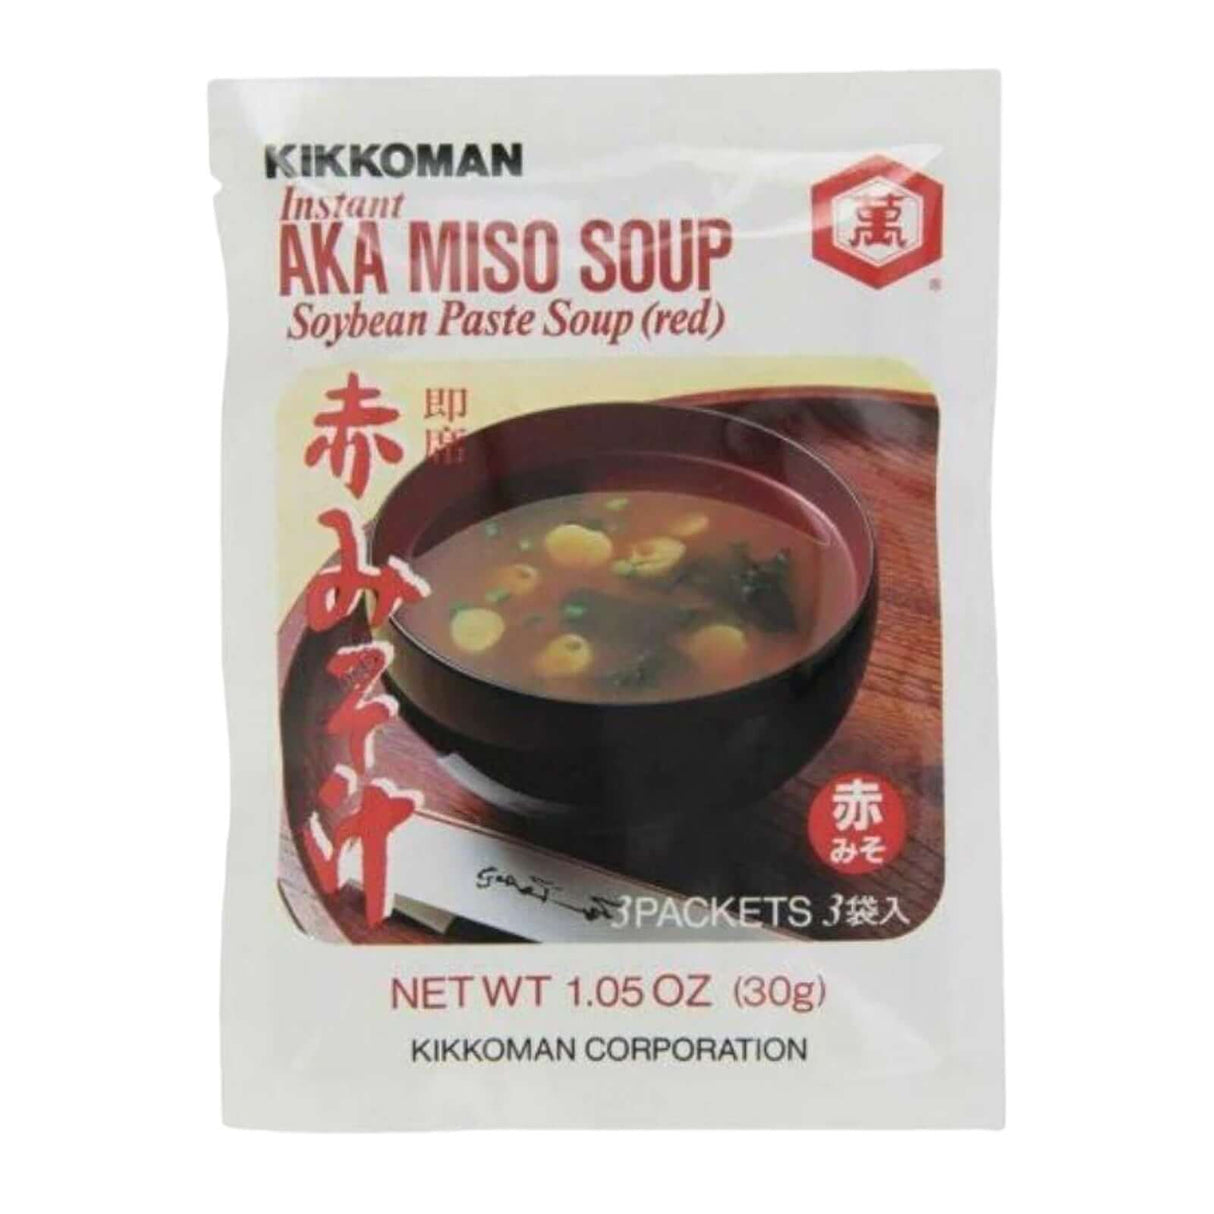 Kikkoman Instant Aka Miso Soup Red